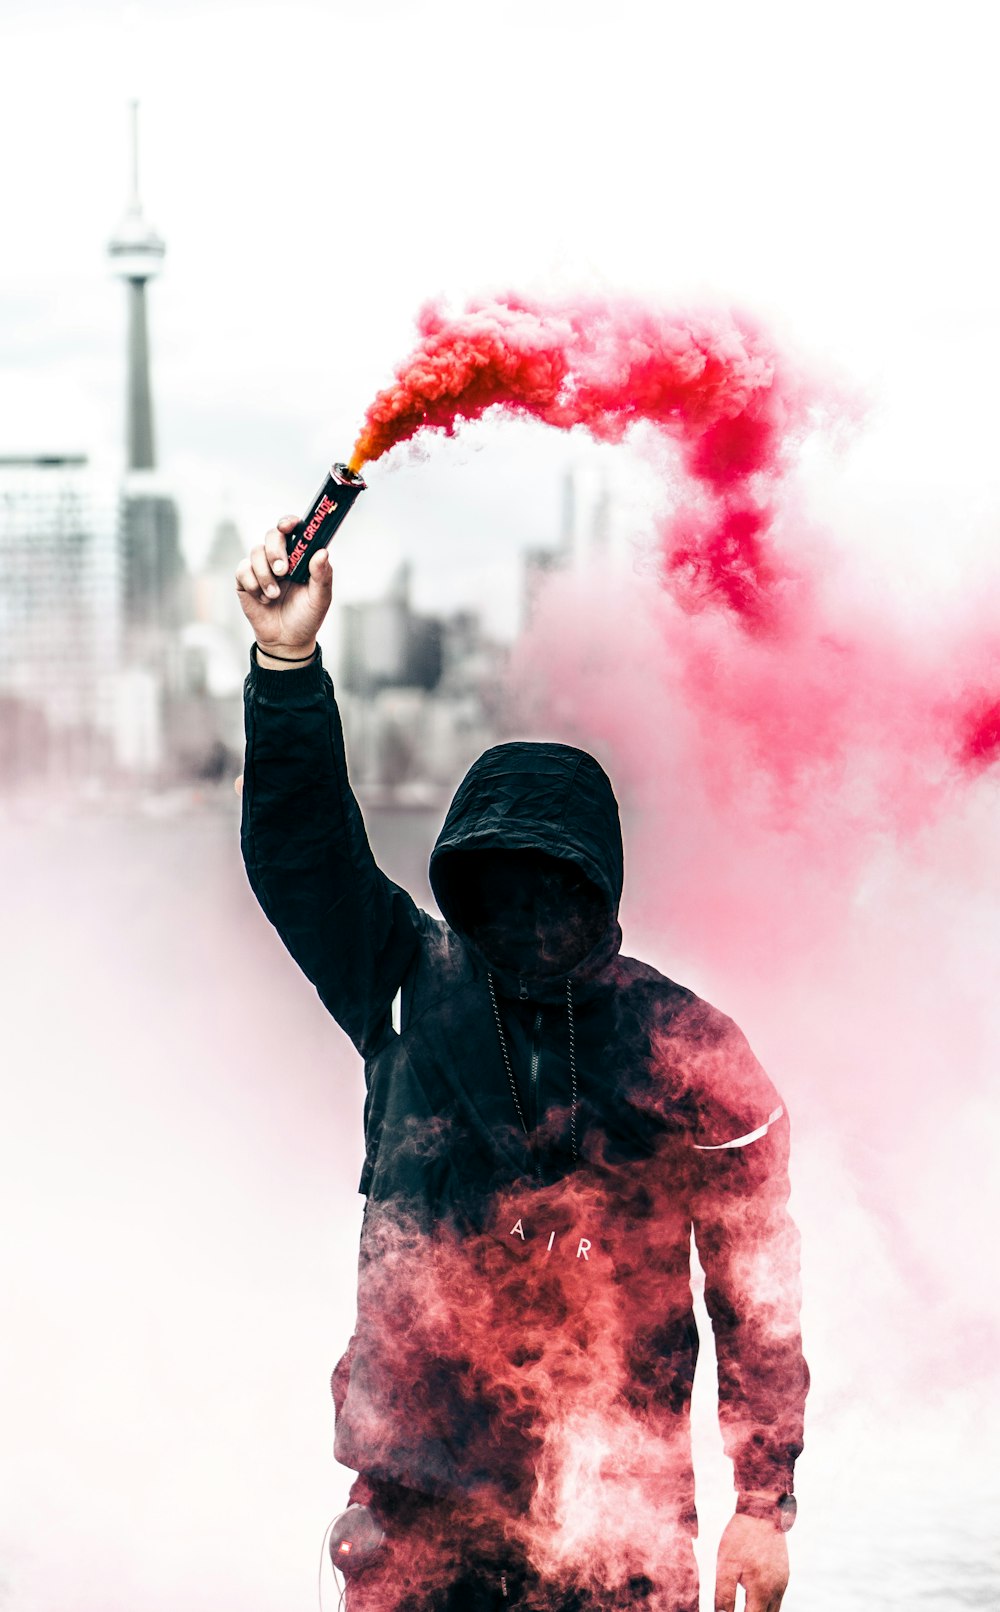 persona con capucha negra y roja sosteniendo una bomba de humo